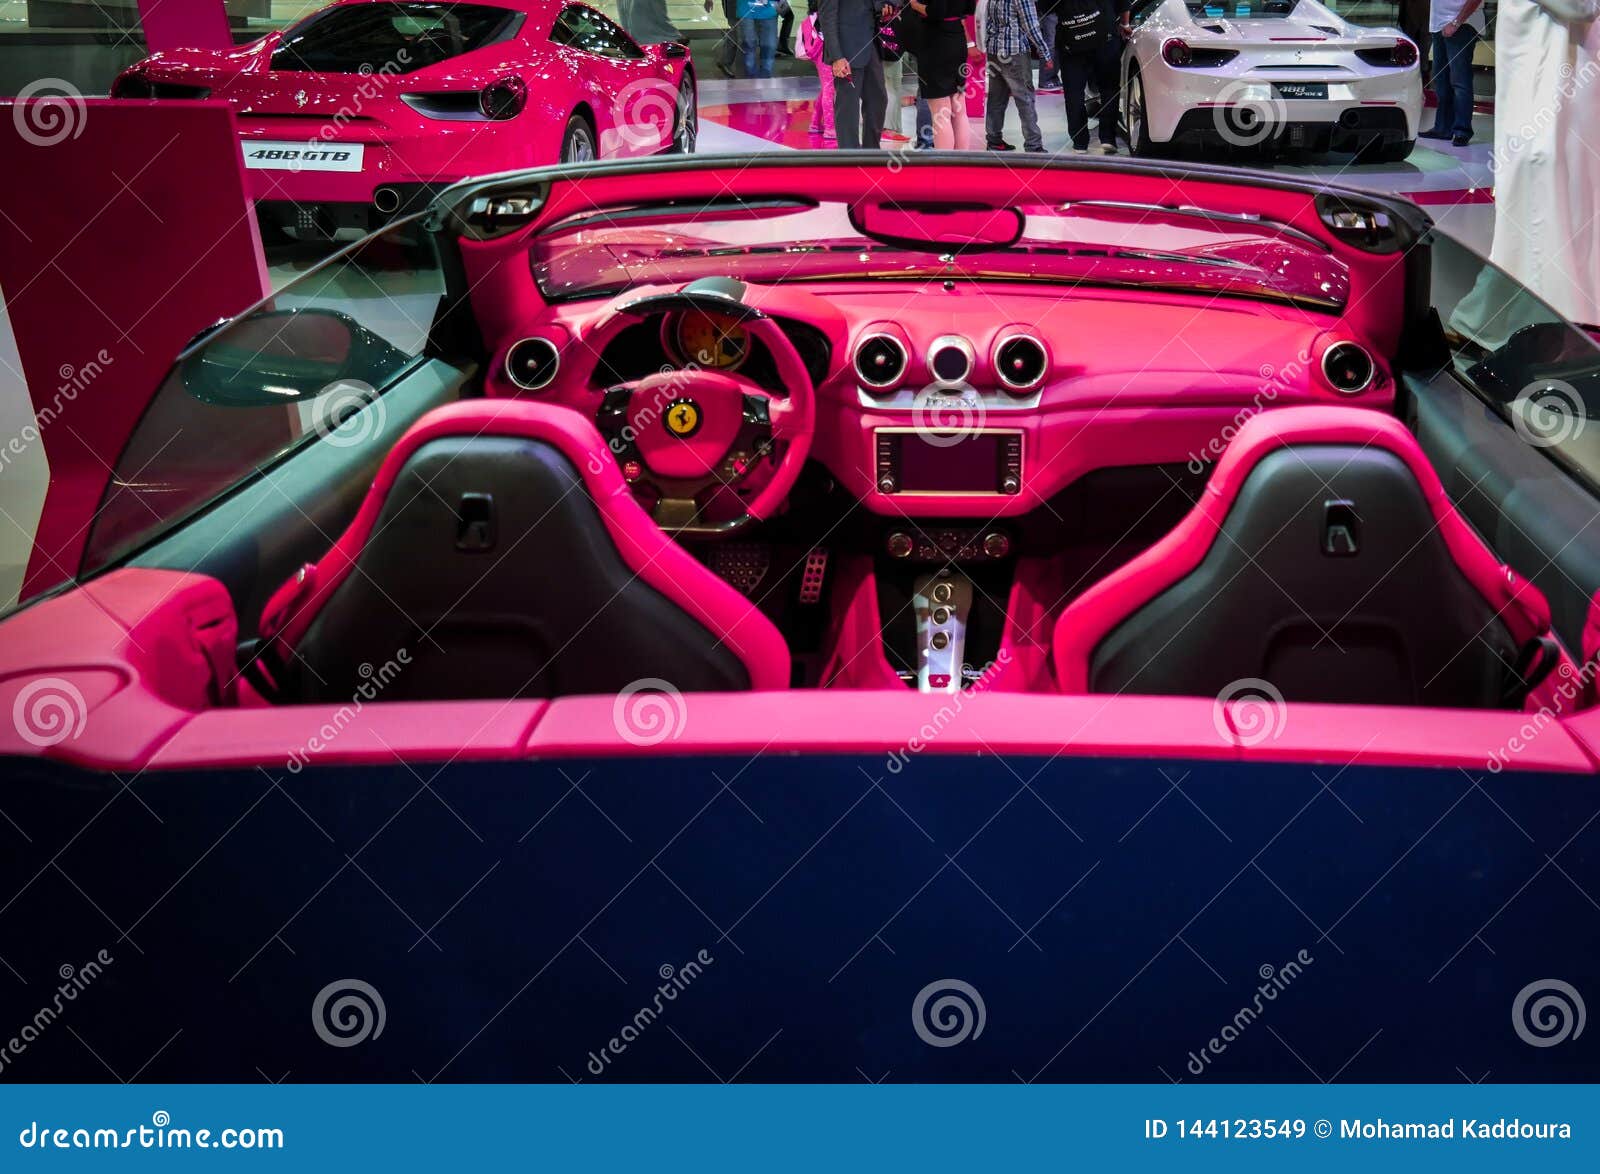 Epic Convertible Luxurious Sports Ferrari Car Beautiful